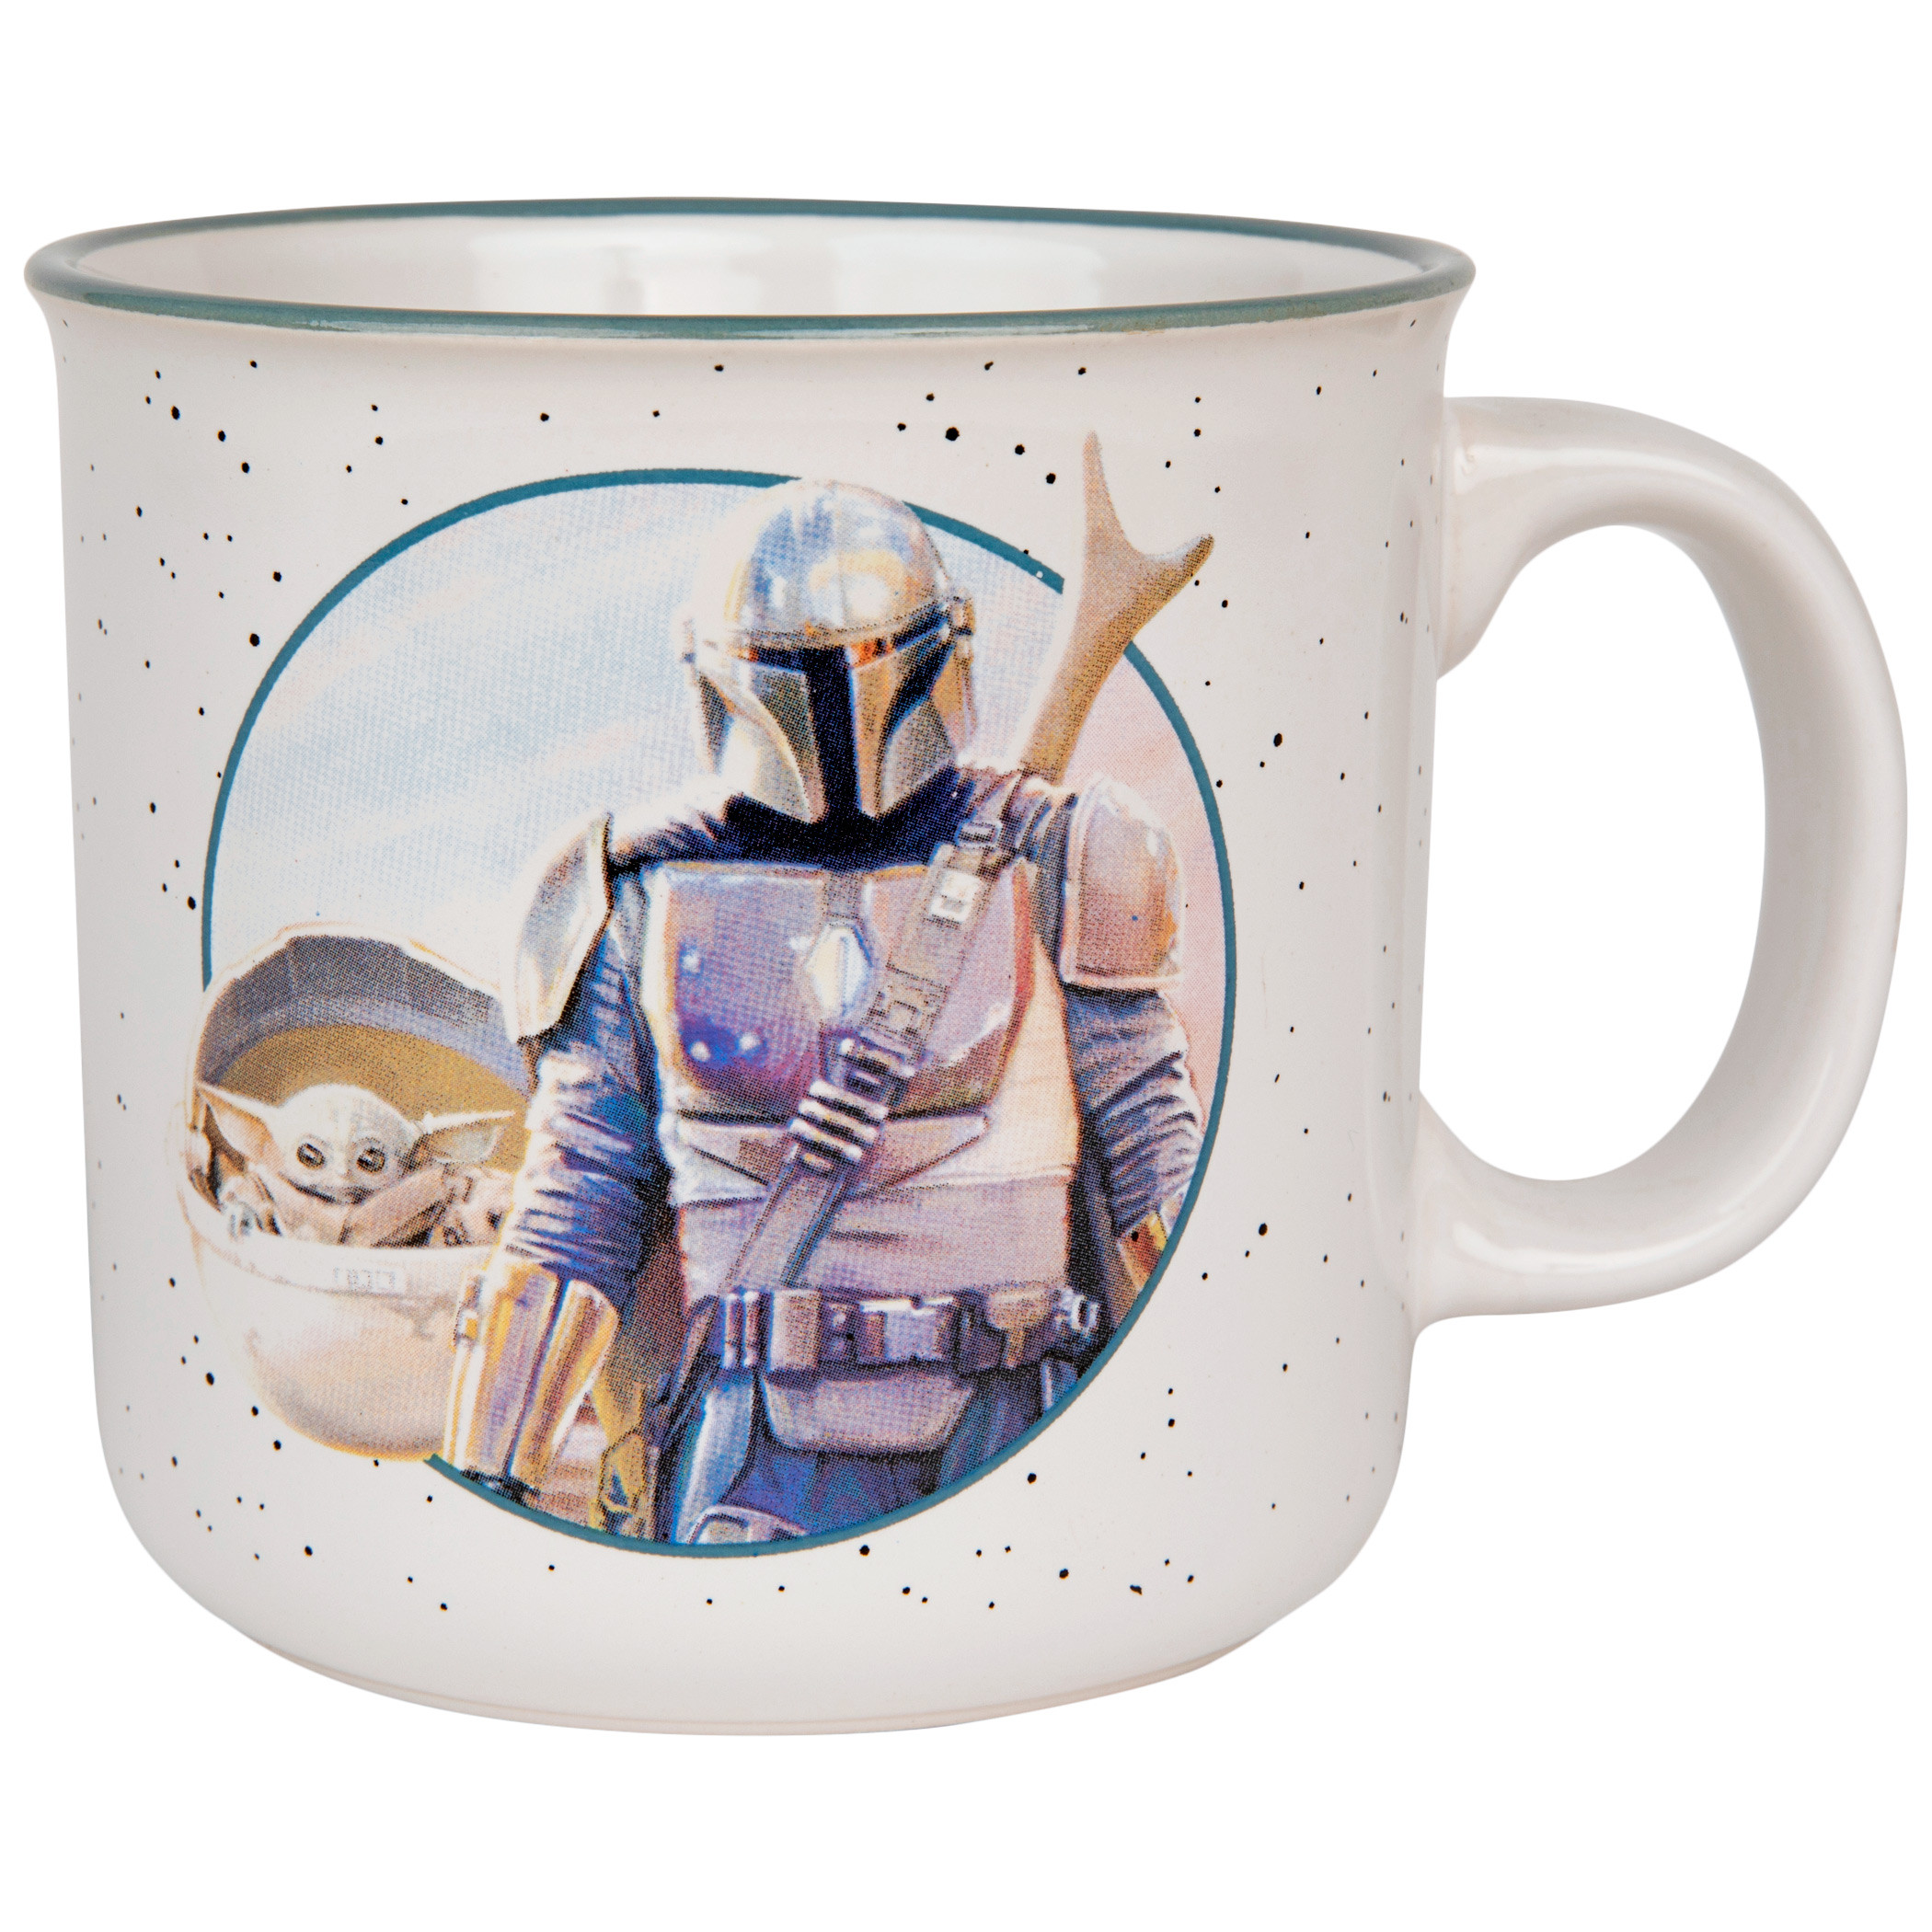 Star Wars, Ceramic, Camper Mug, Multi Colored, 20 Ounces